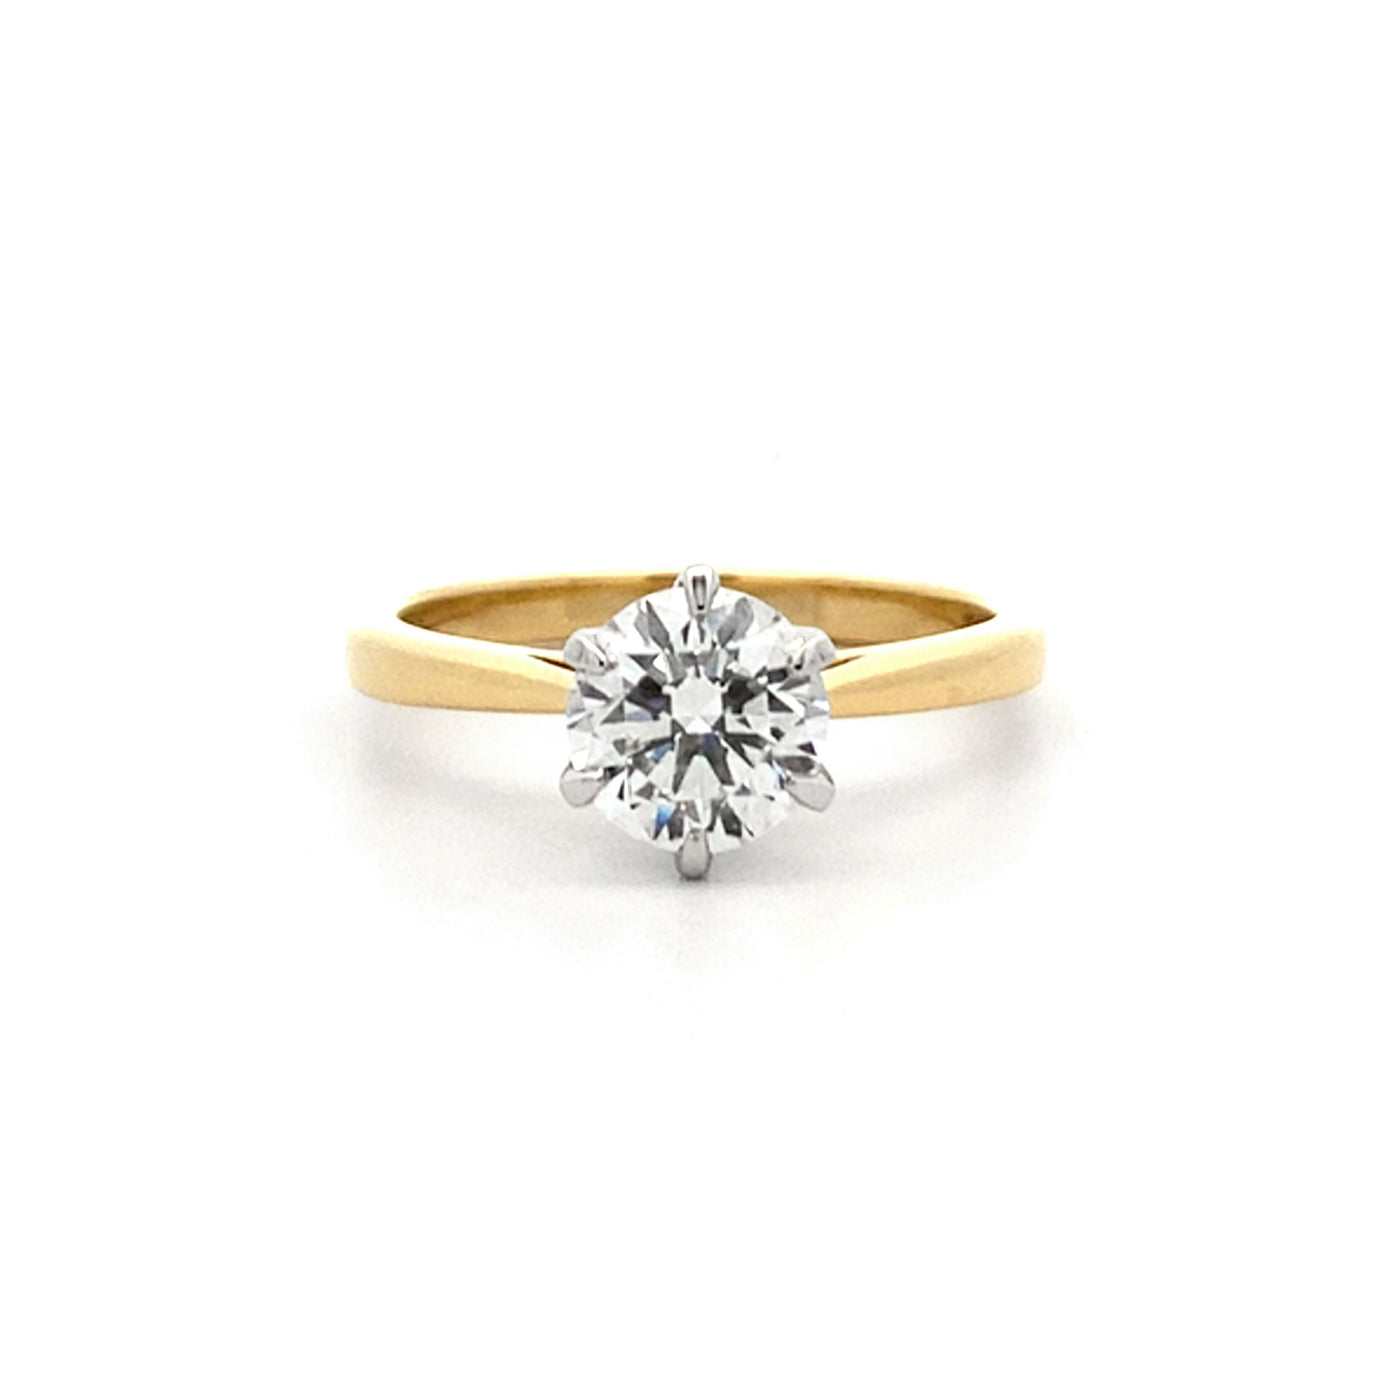 Jolie: Brilliant Cut Diamond Solitaire Ring in Yellow Gold | 1.04ct F SI2